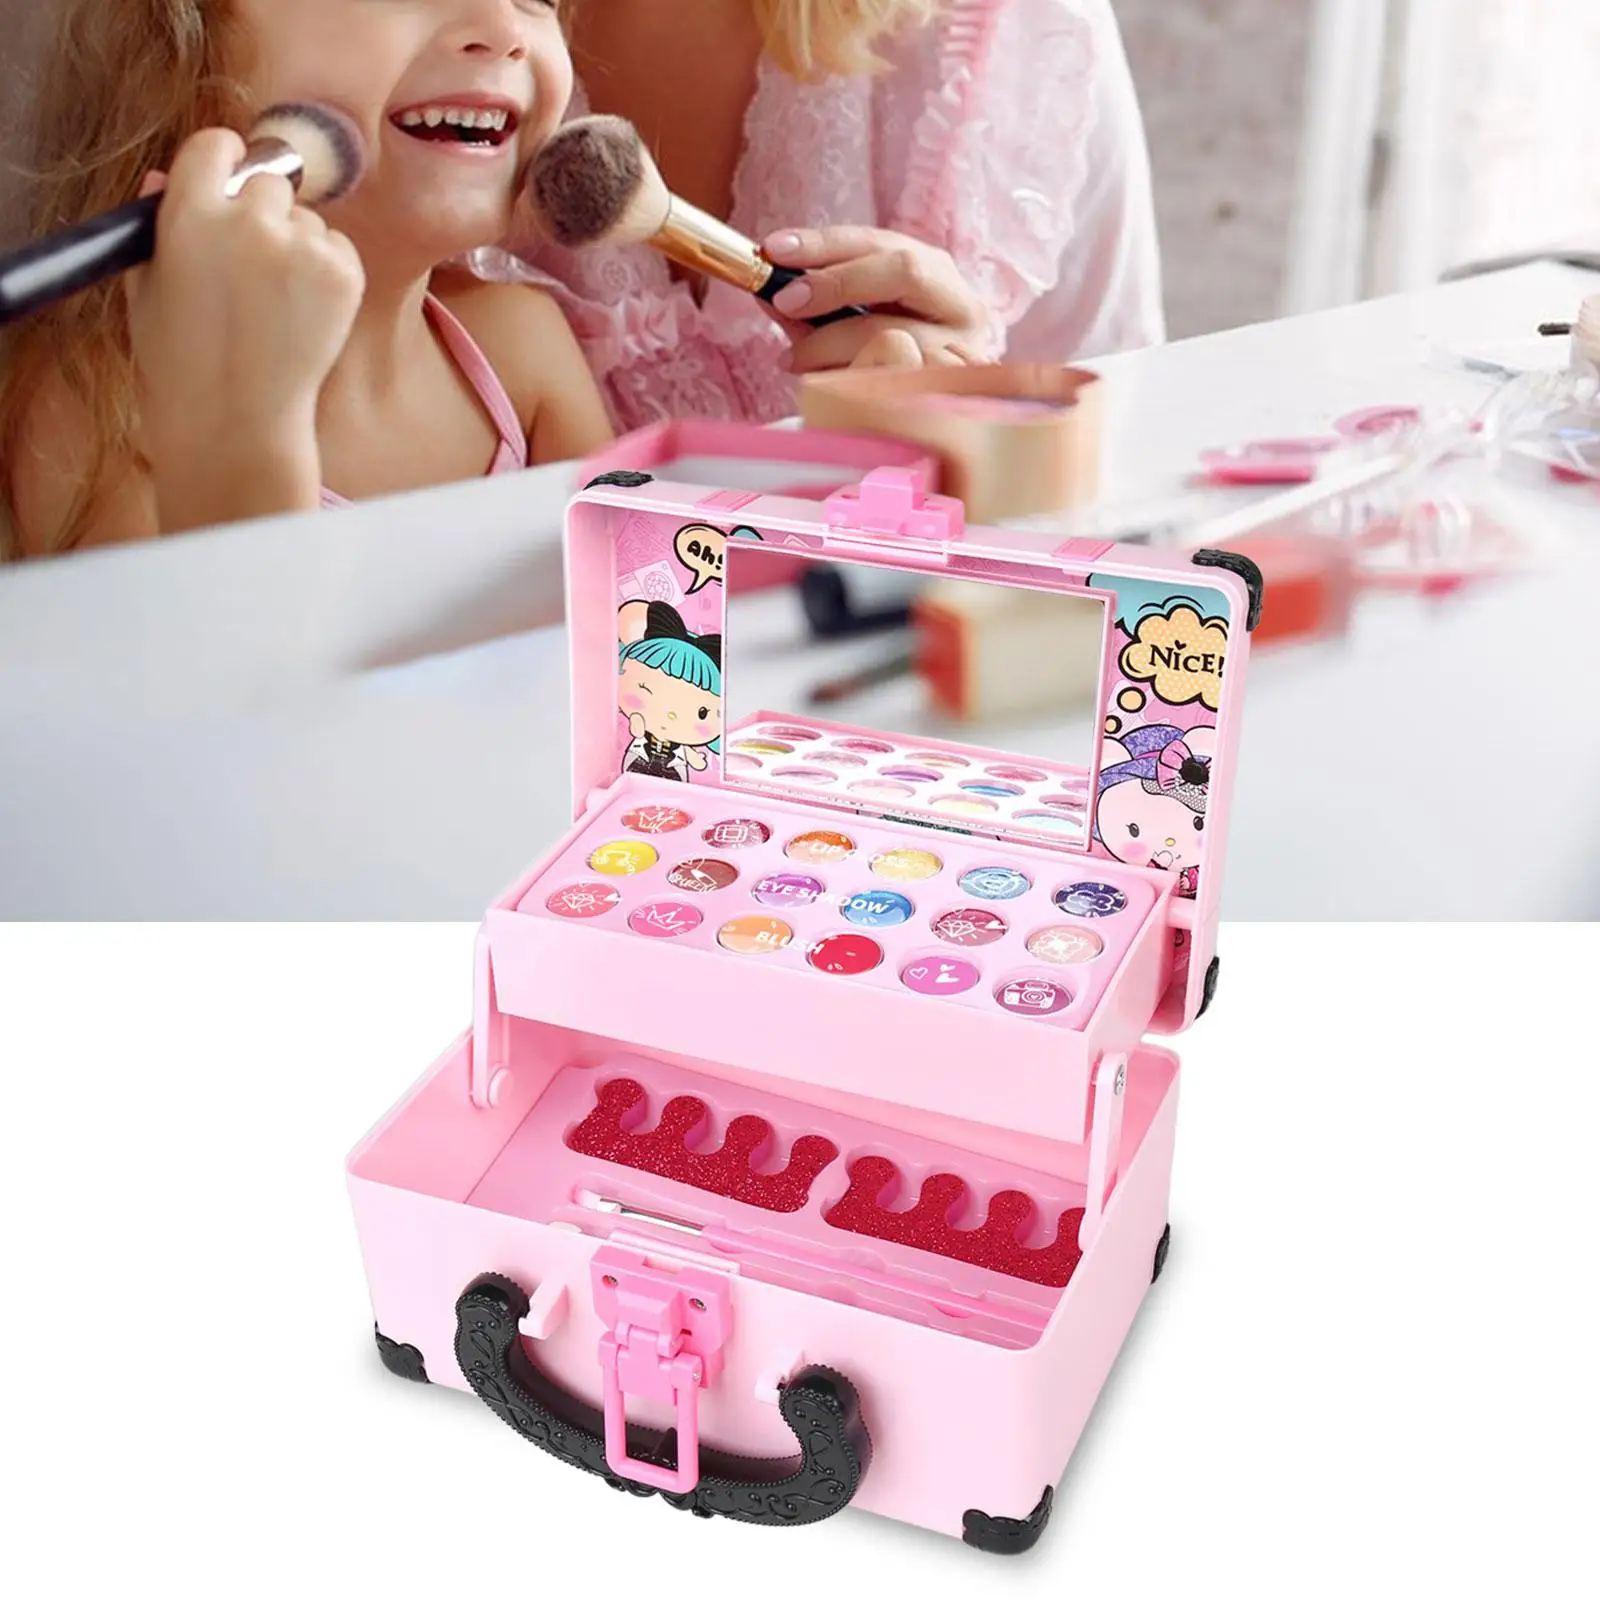 Cosmetics Makeup Toy Set Dresser Toy Role Playing Toy Makeup Vanity Toy Playset Pretend Makeup Set Kids Makeup Set for Kids